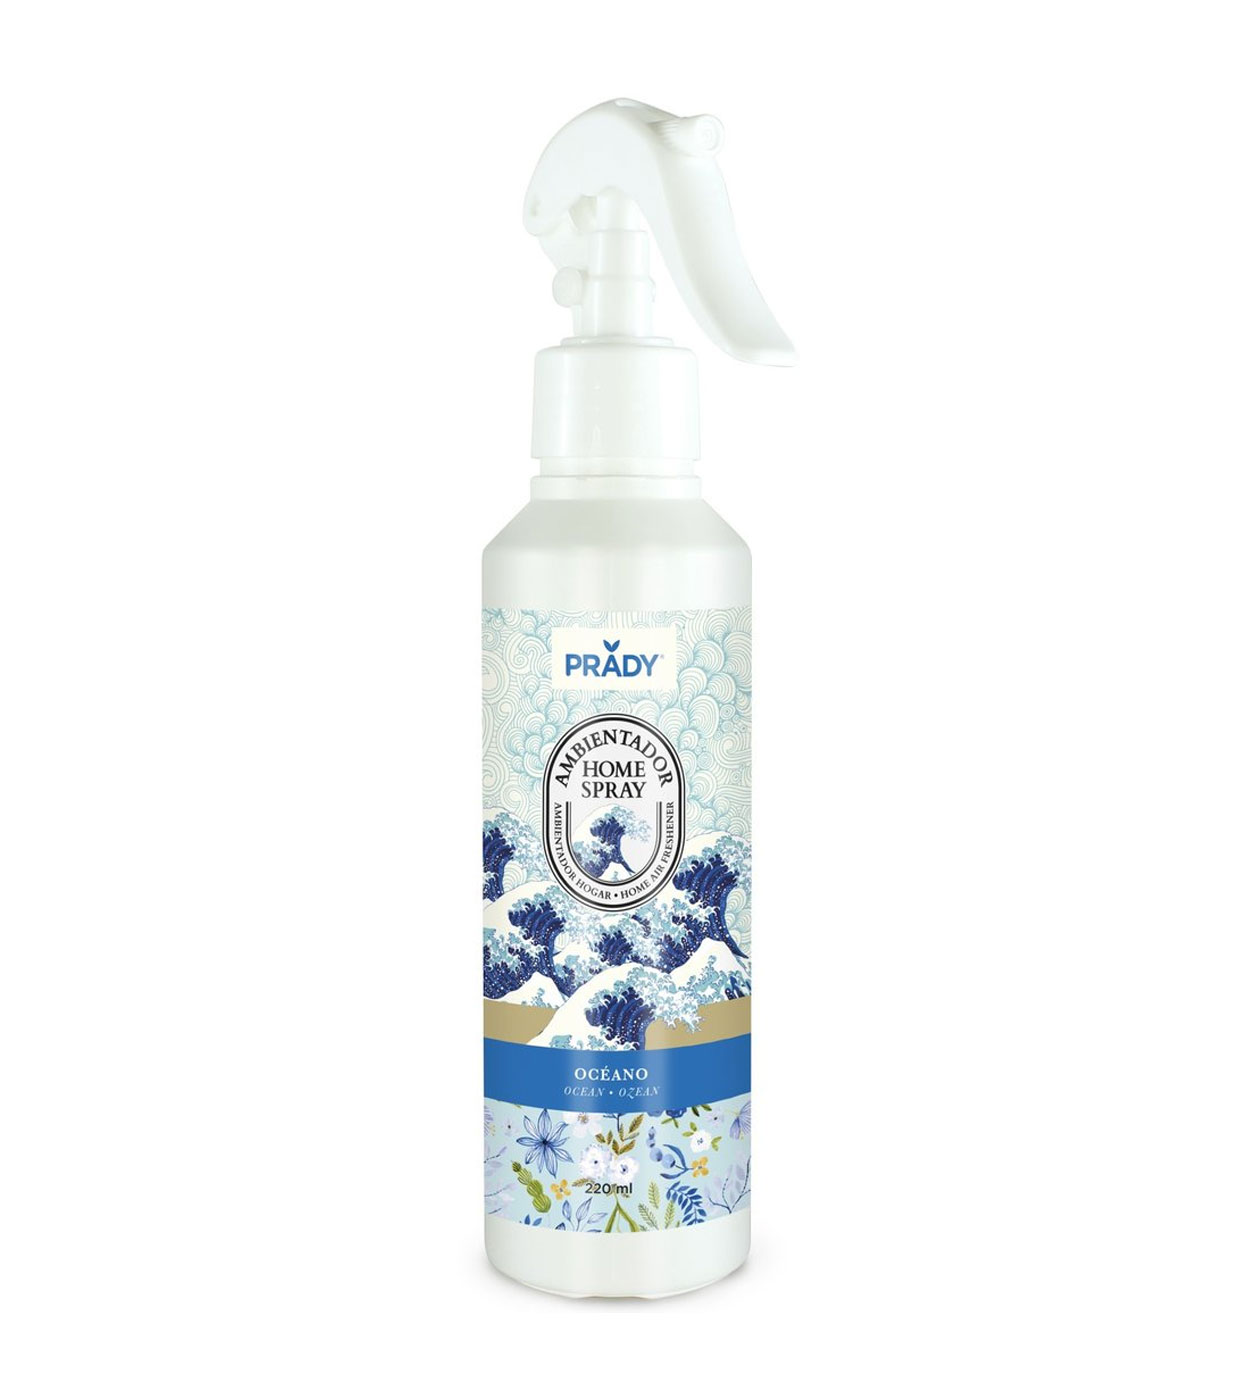 Prady - Deodorante spray per ambienti - Dama de Noche